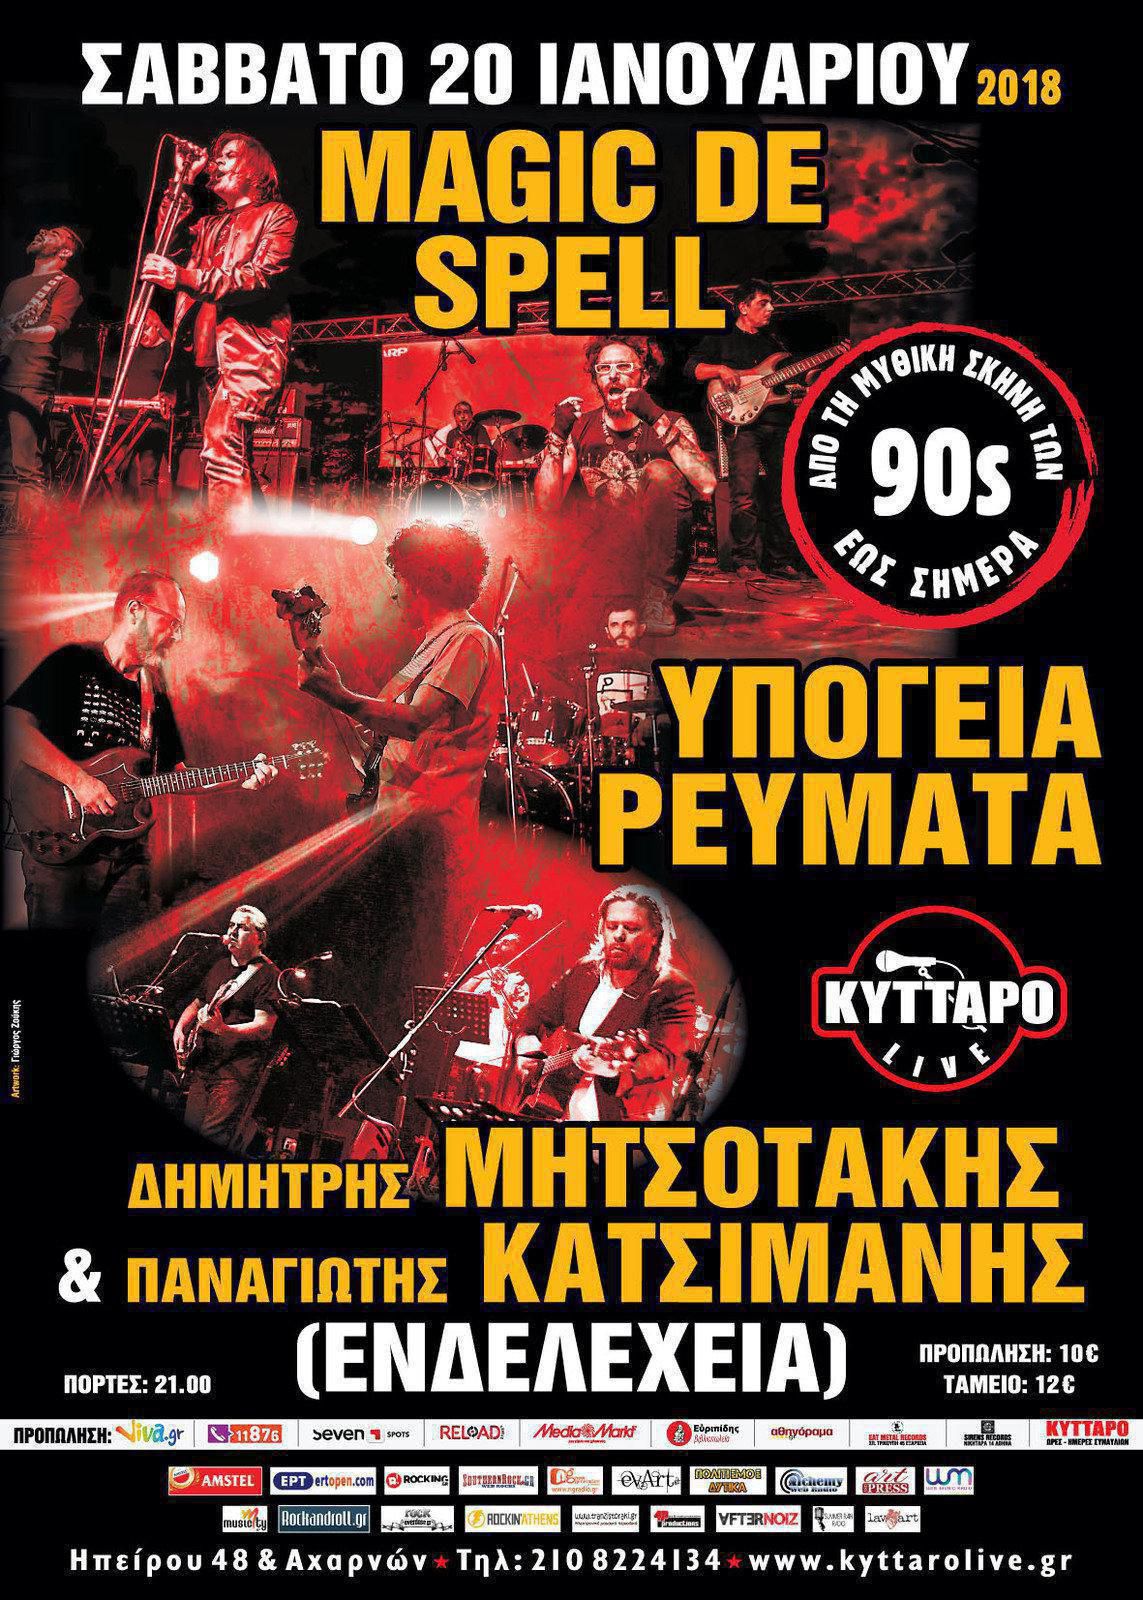 Kyttaro Live 20 Jan_web.jpg